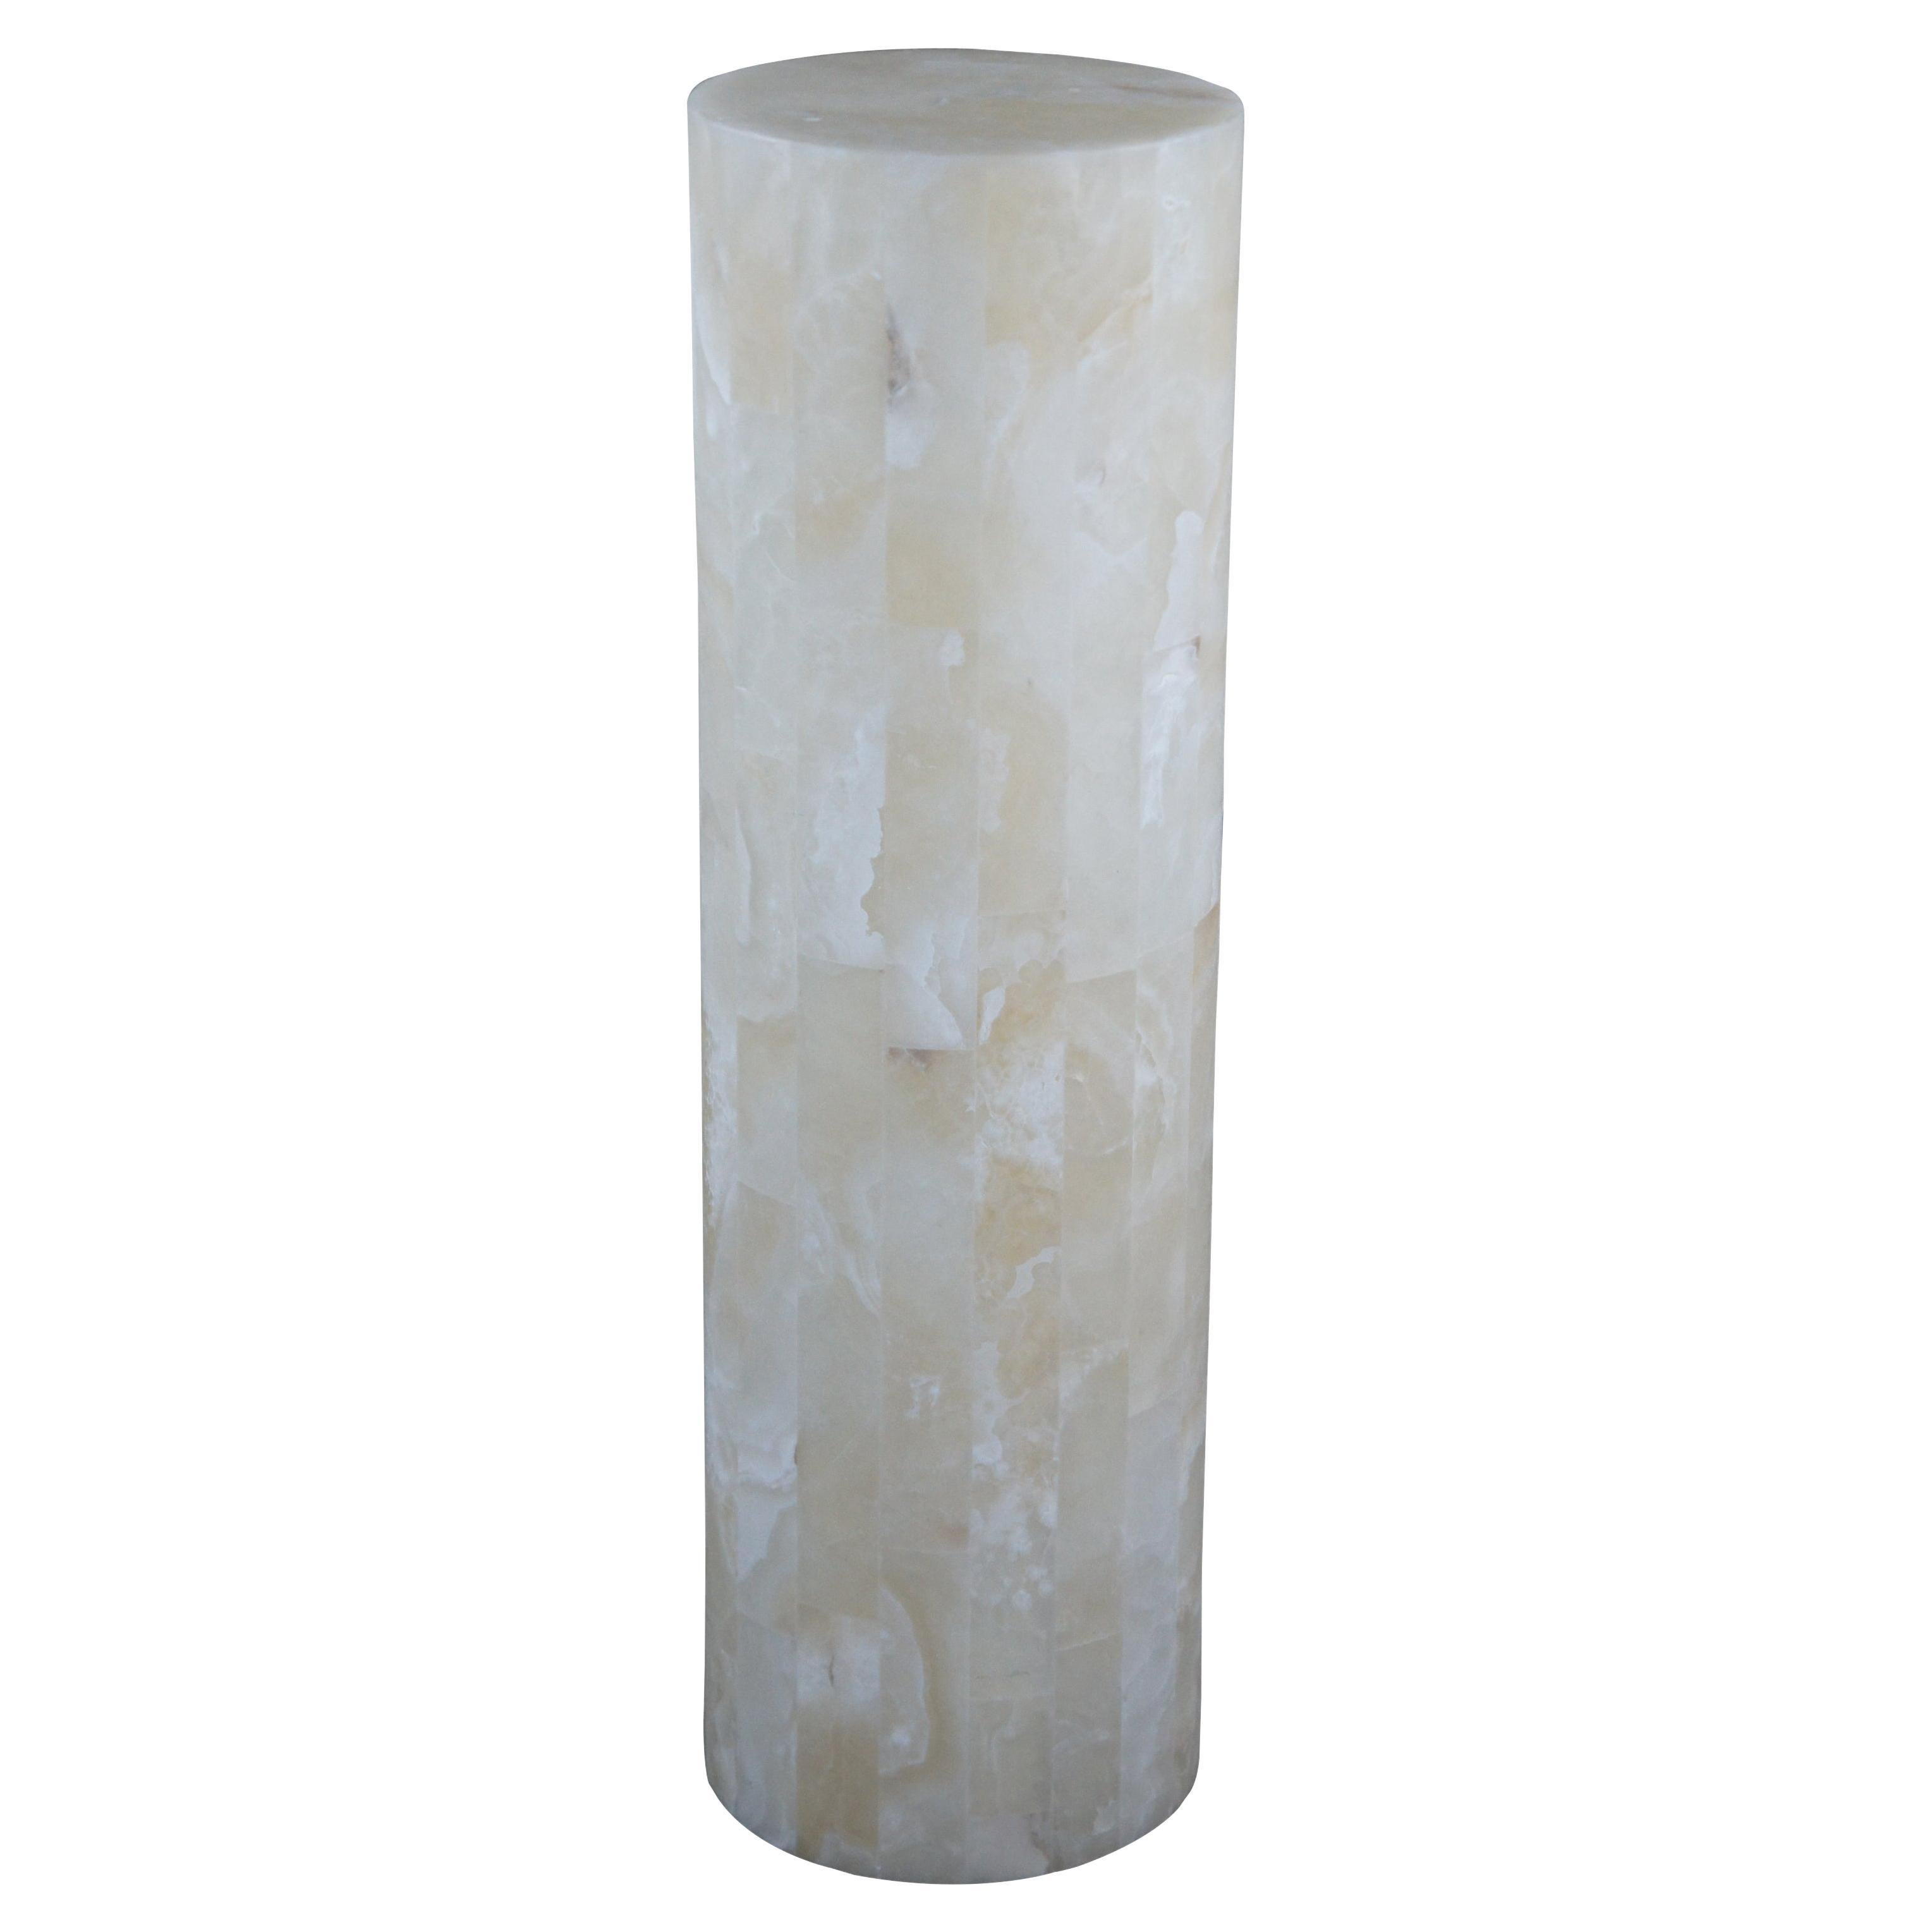 Tessellated Onyx Modern Floor Lamp Sculpture Pedestal Column Crystal Lantern 40"